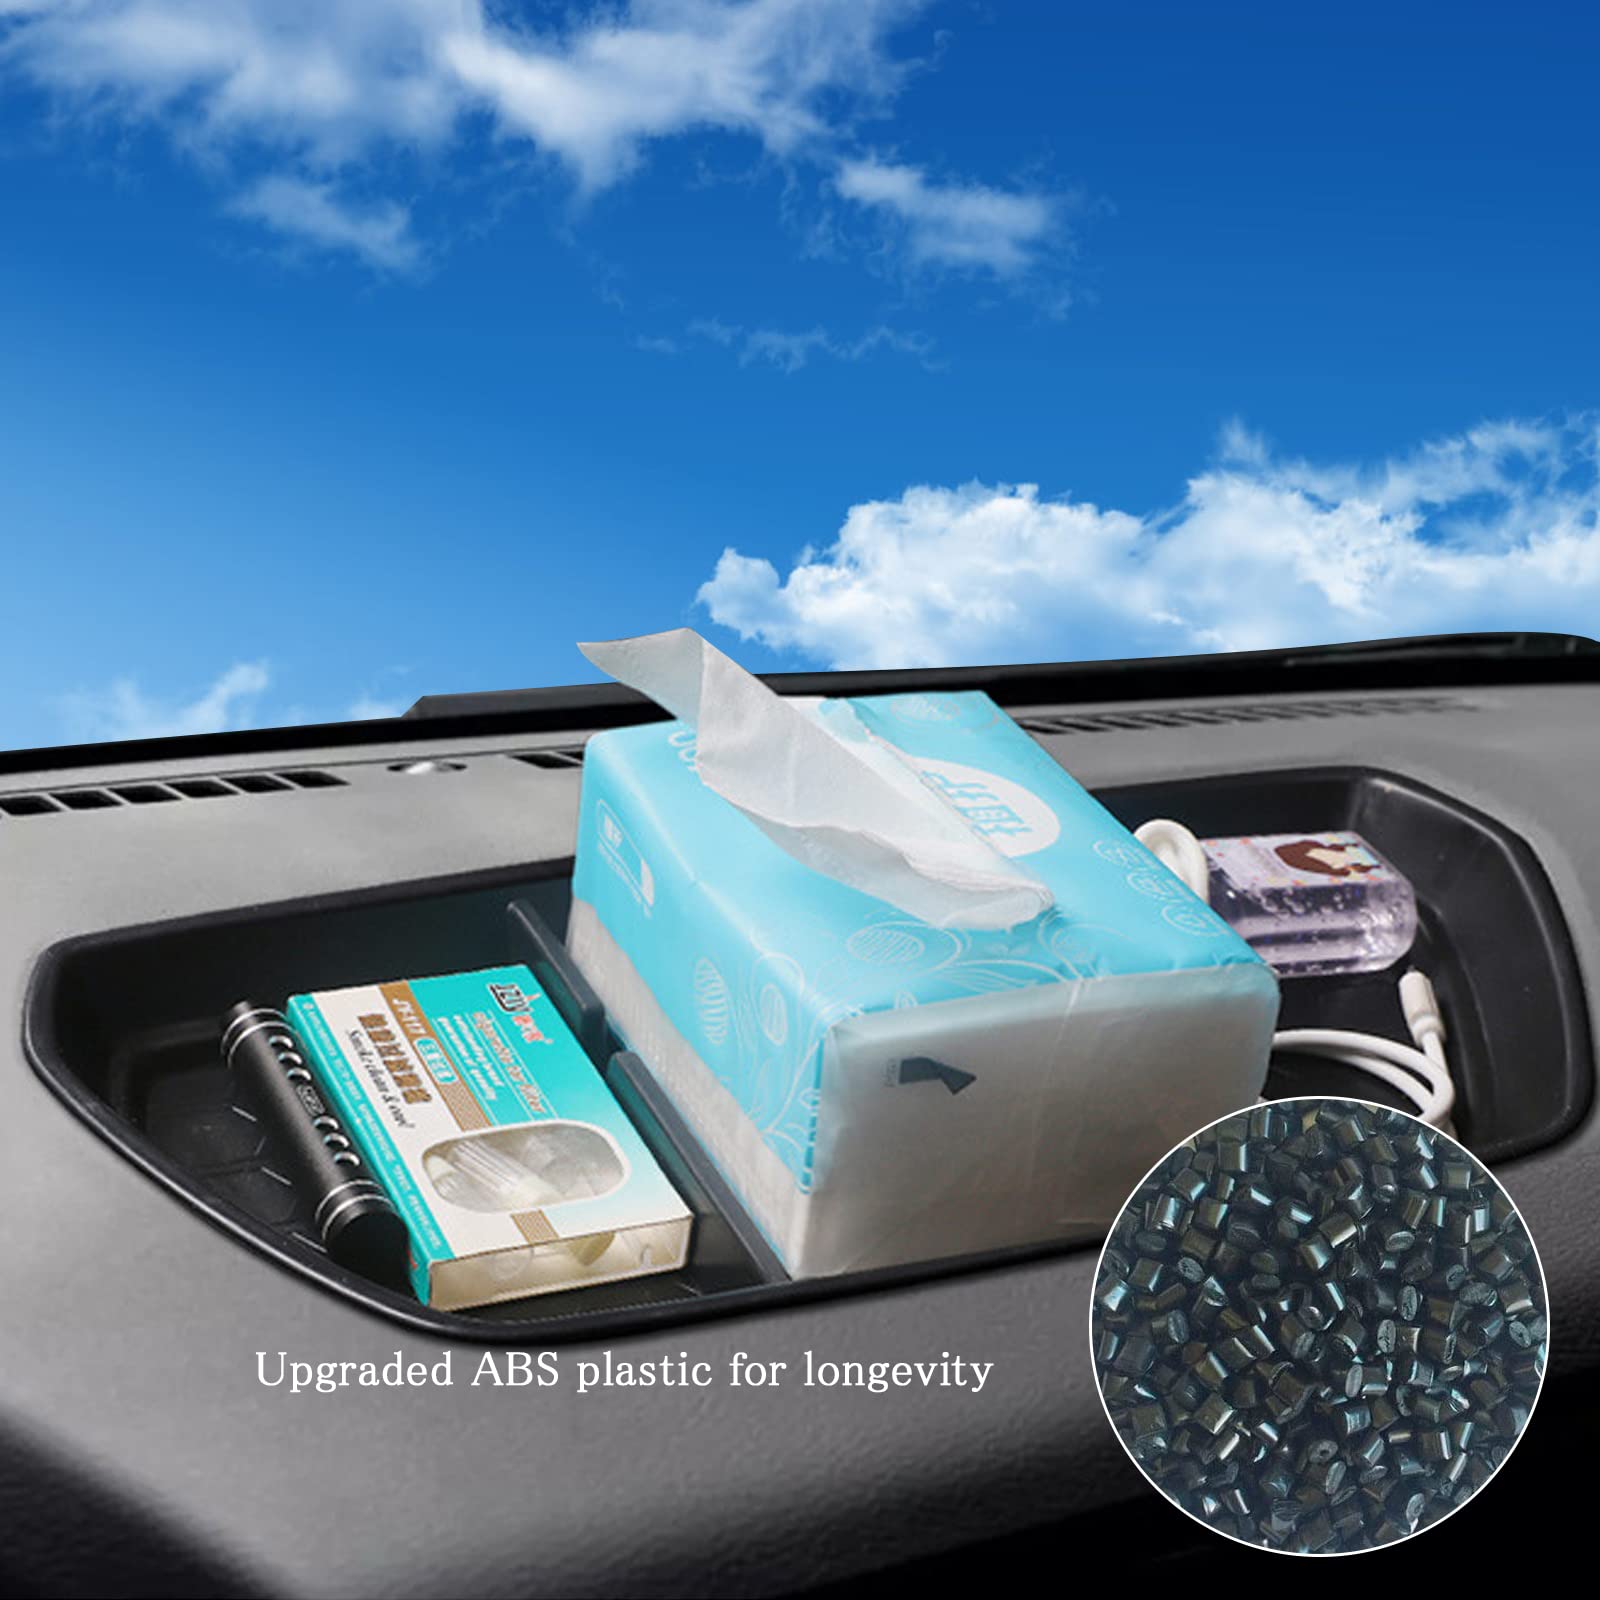 Nissan Frontier Center Armrest Storage Tray 2022+ - LFOTPP Car Accessories